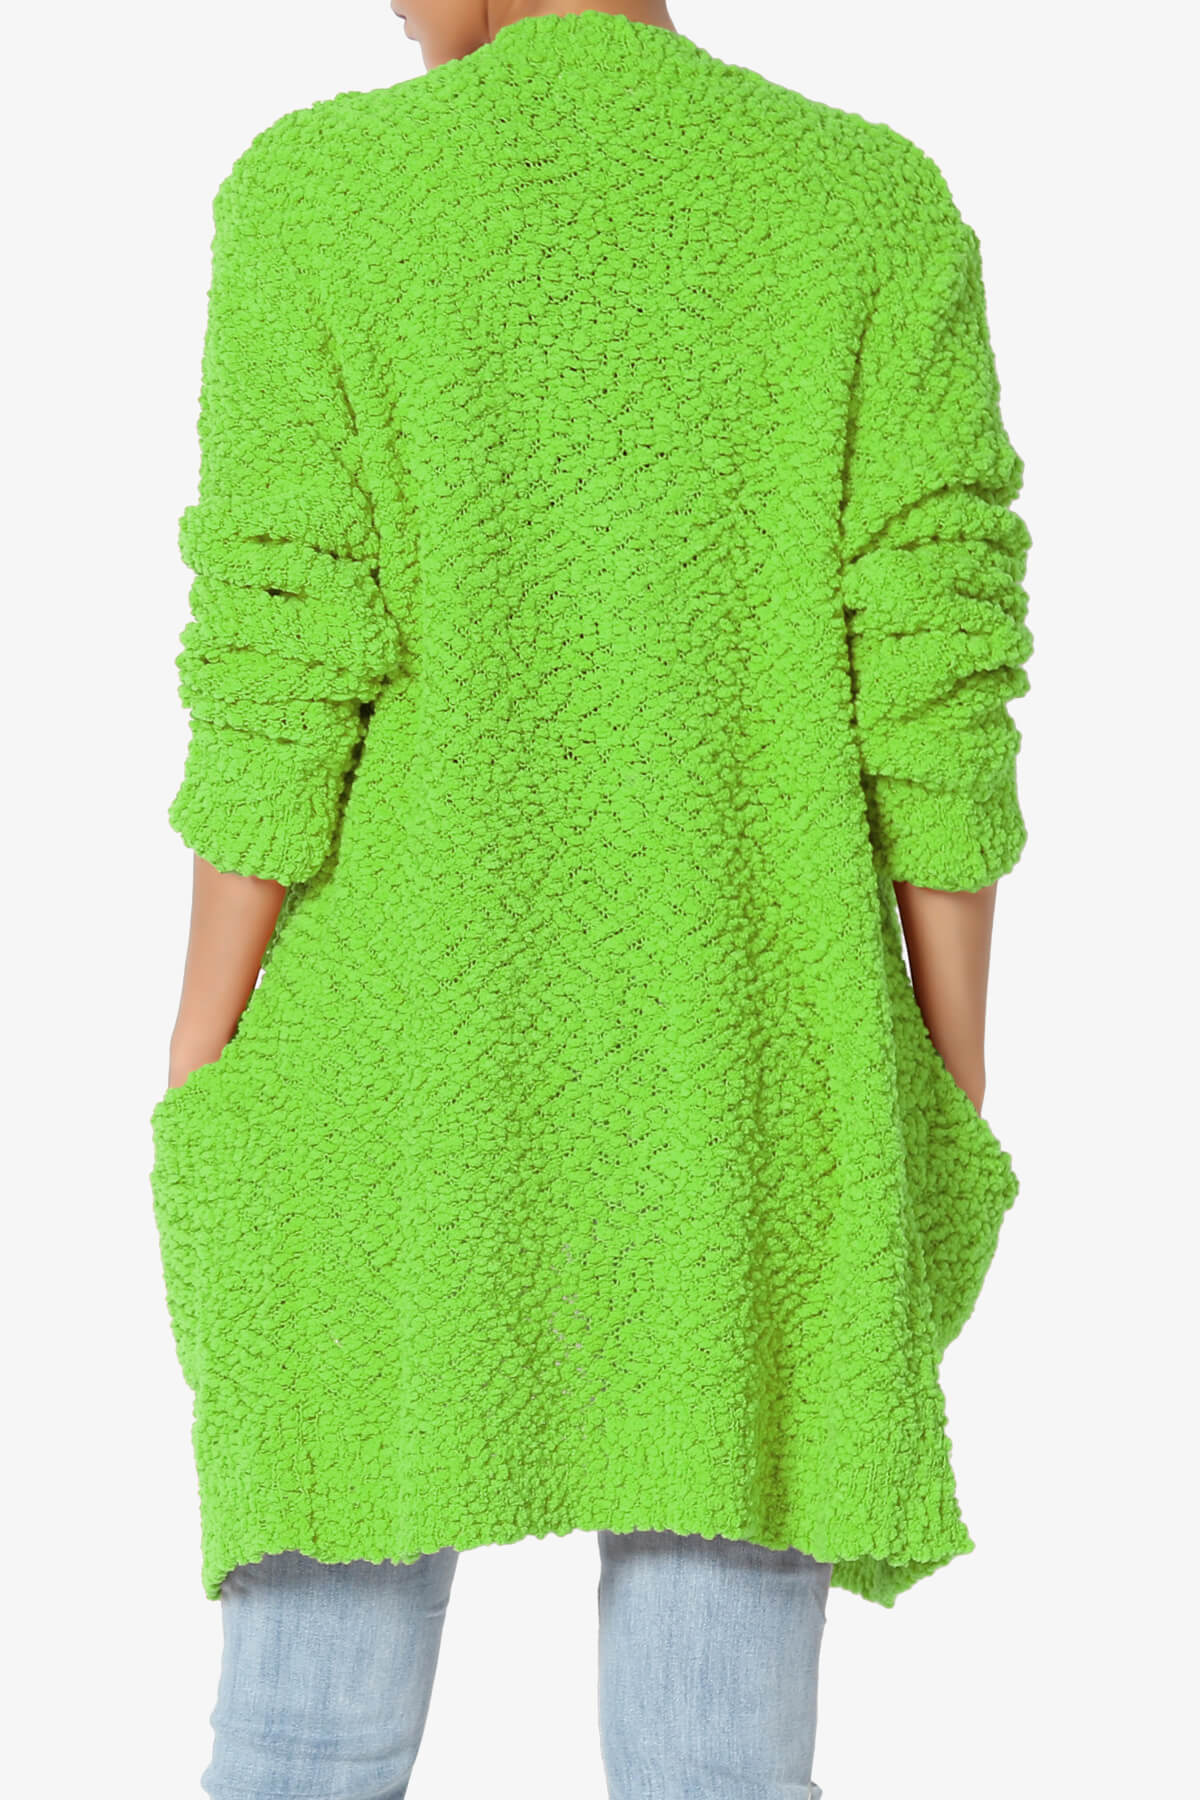 Barry Soft Popcorn Knit Sweater Cardigan GREEN_2